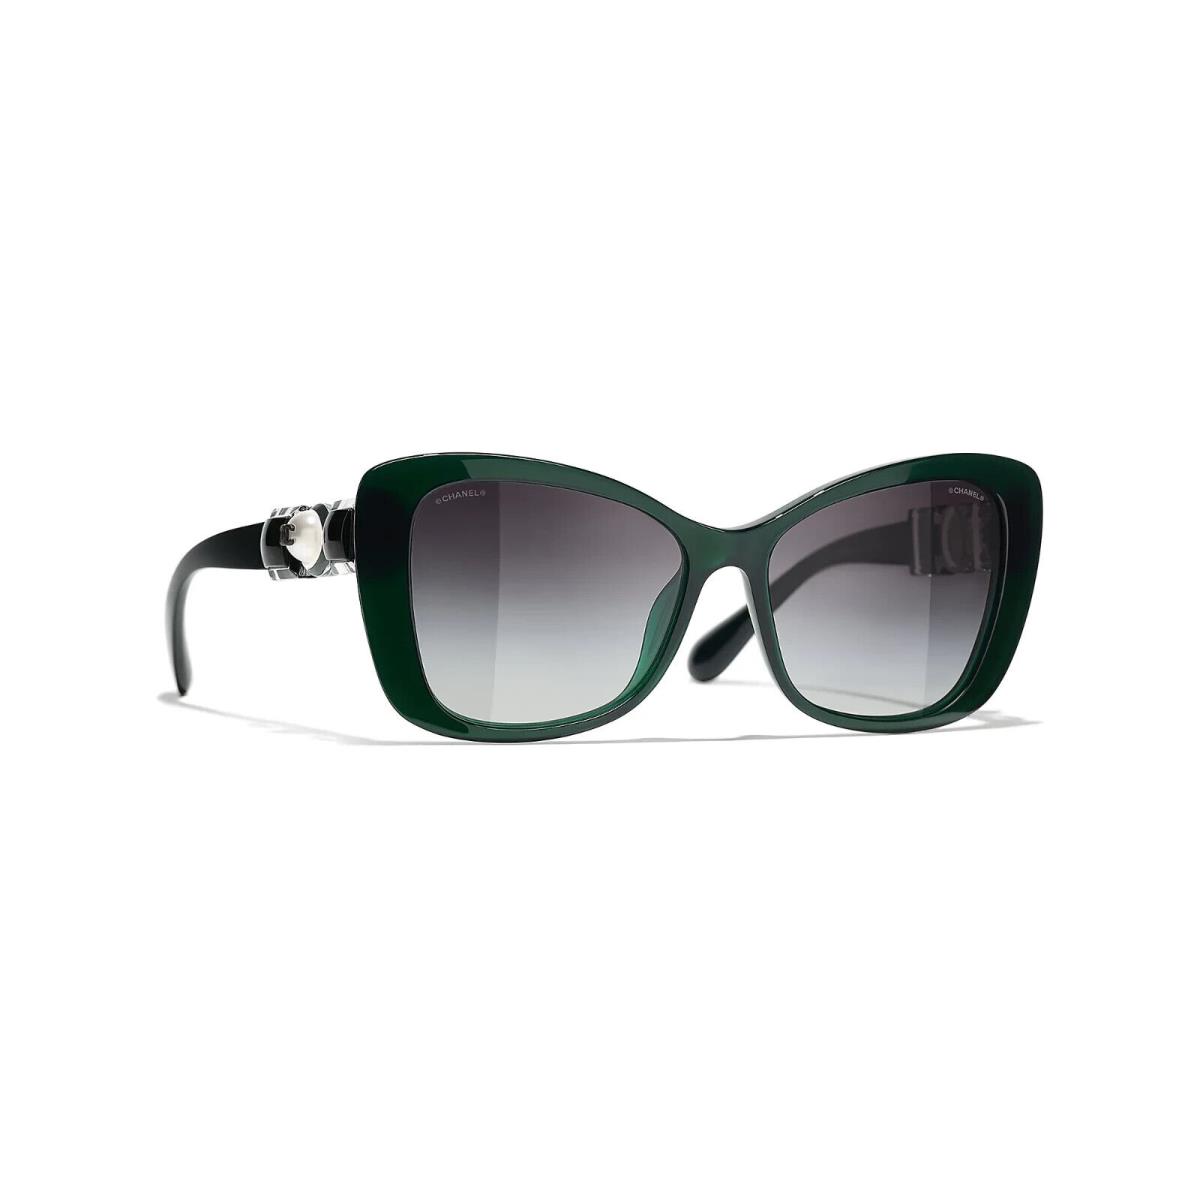 Chanel CH 5445H 1672/S6 Dark Green / Gray Gradient Lens Butterfly Sunglasses